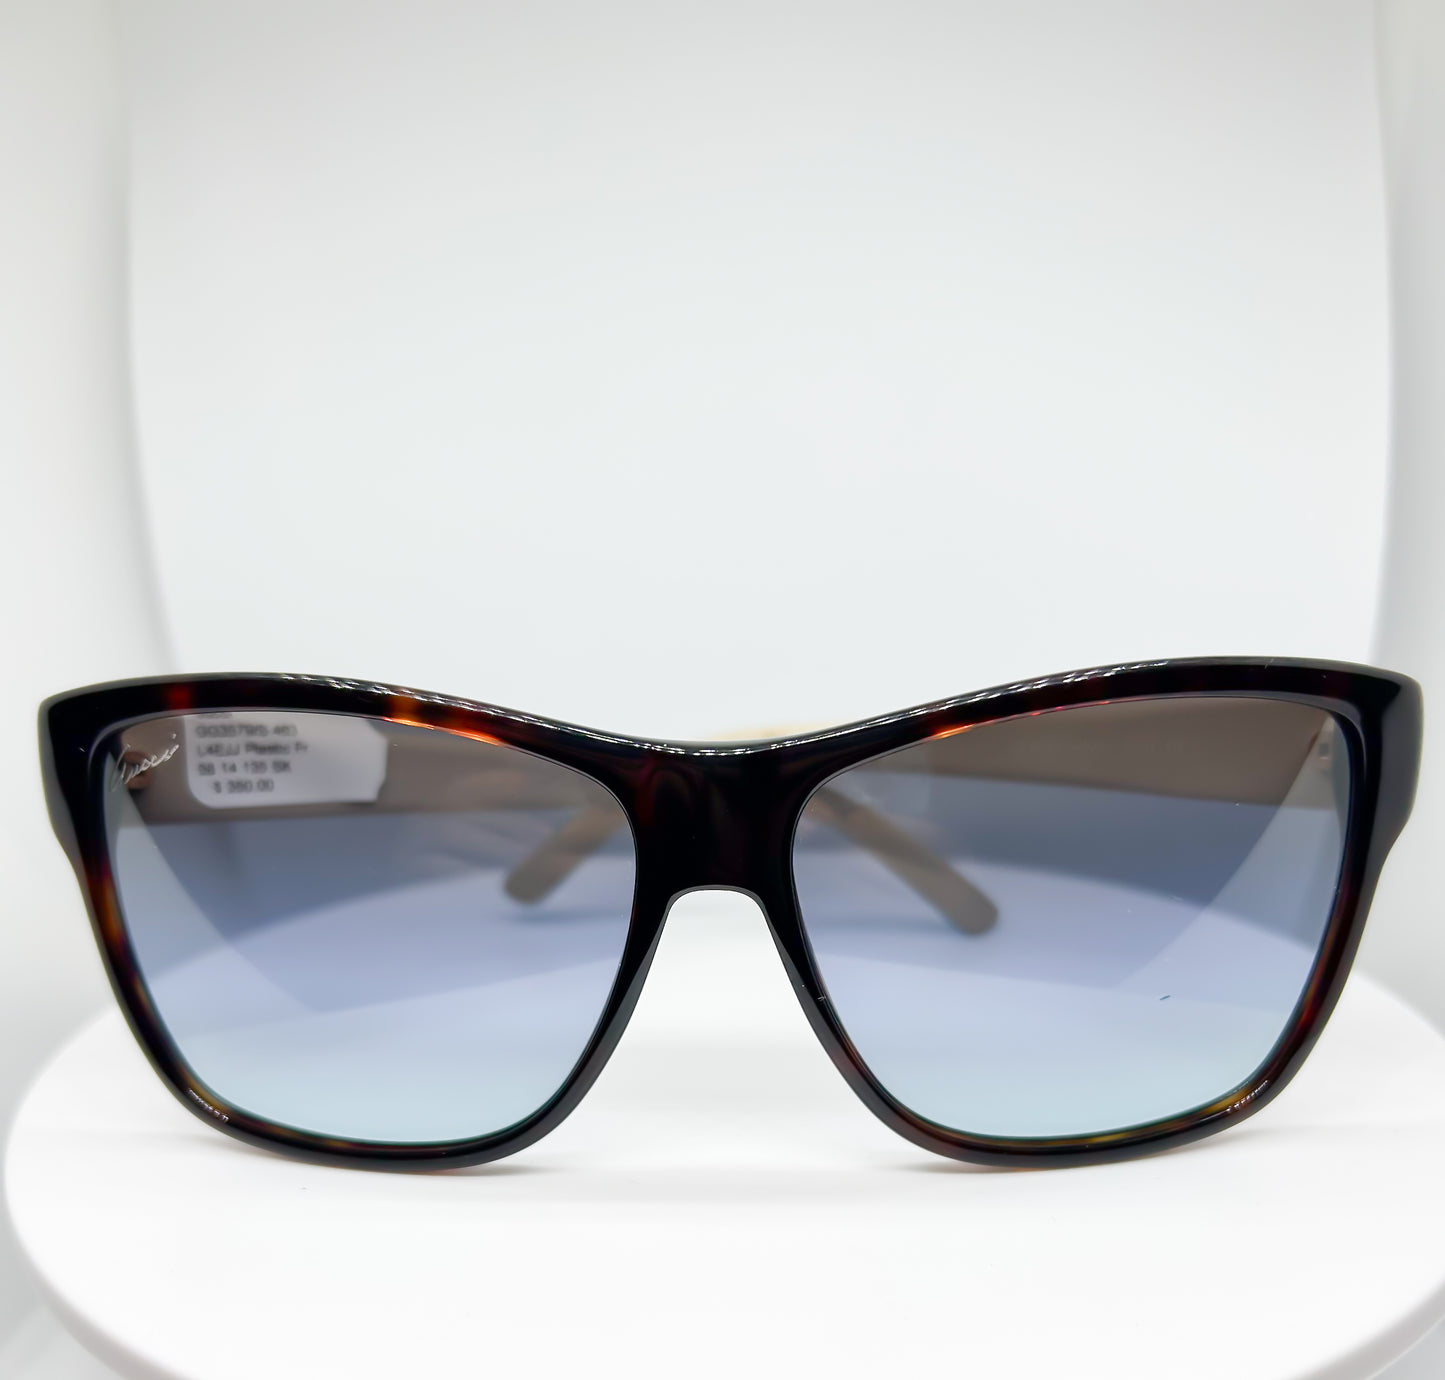 Gucci GG3579/S Women  Sunglasses Frame Sunglasses Eyewear from Adair Eyewear - Over 40 years of customer service excellence